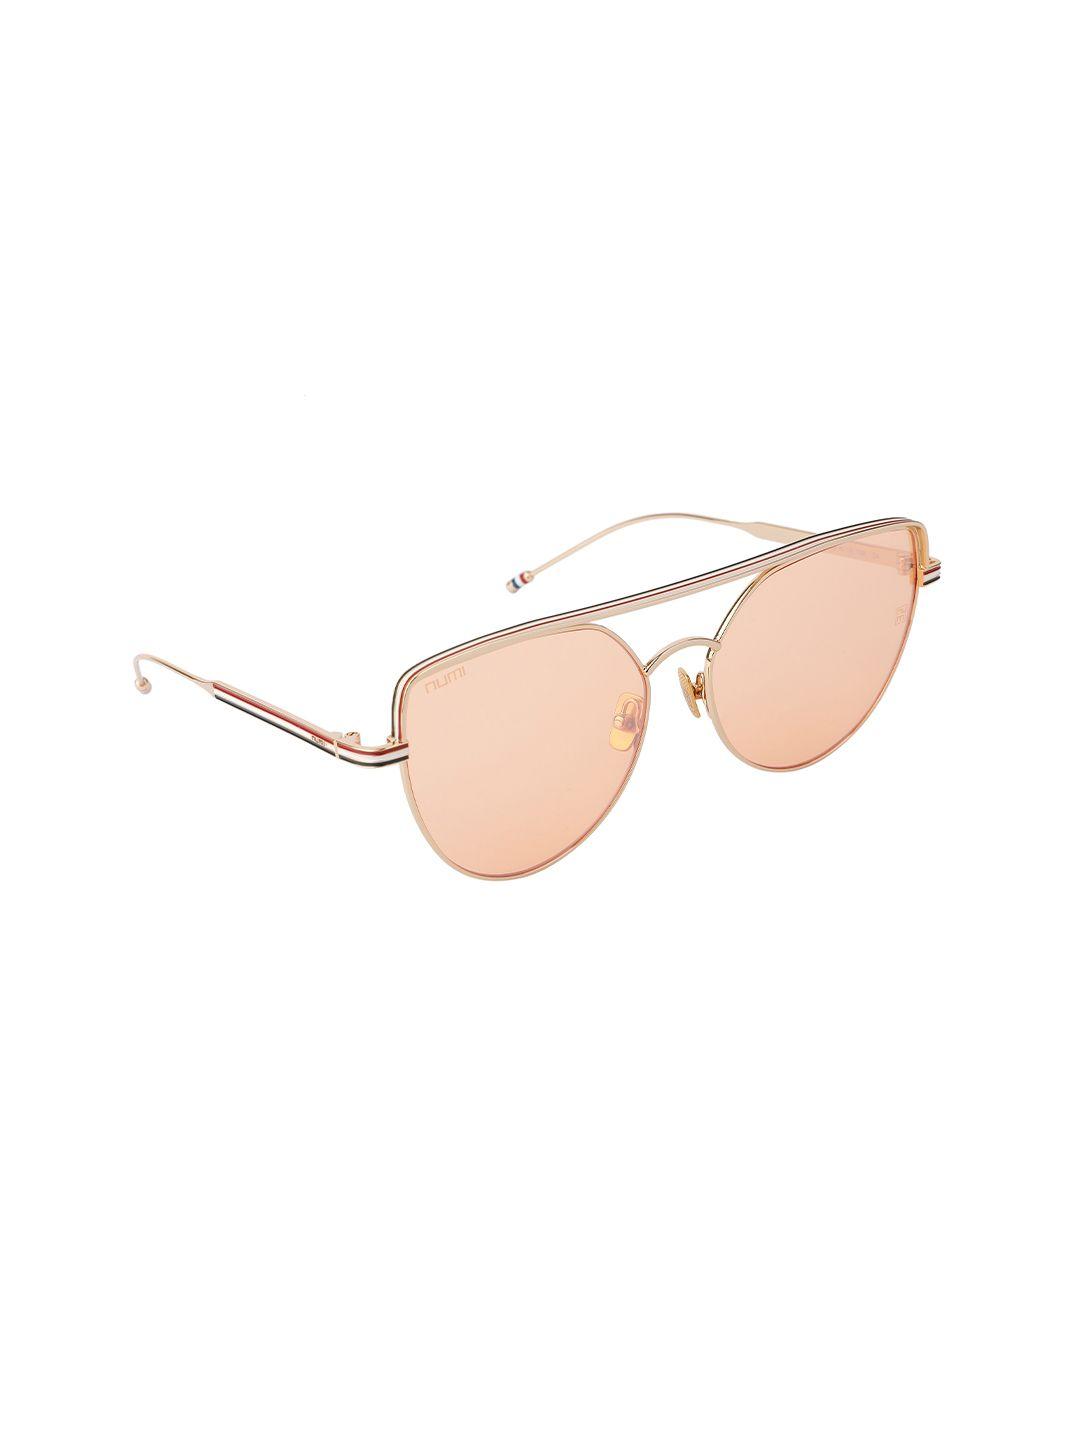 numi unisex orange lens & rose gold-toned aviator sunglasses with uv protected lens